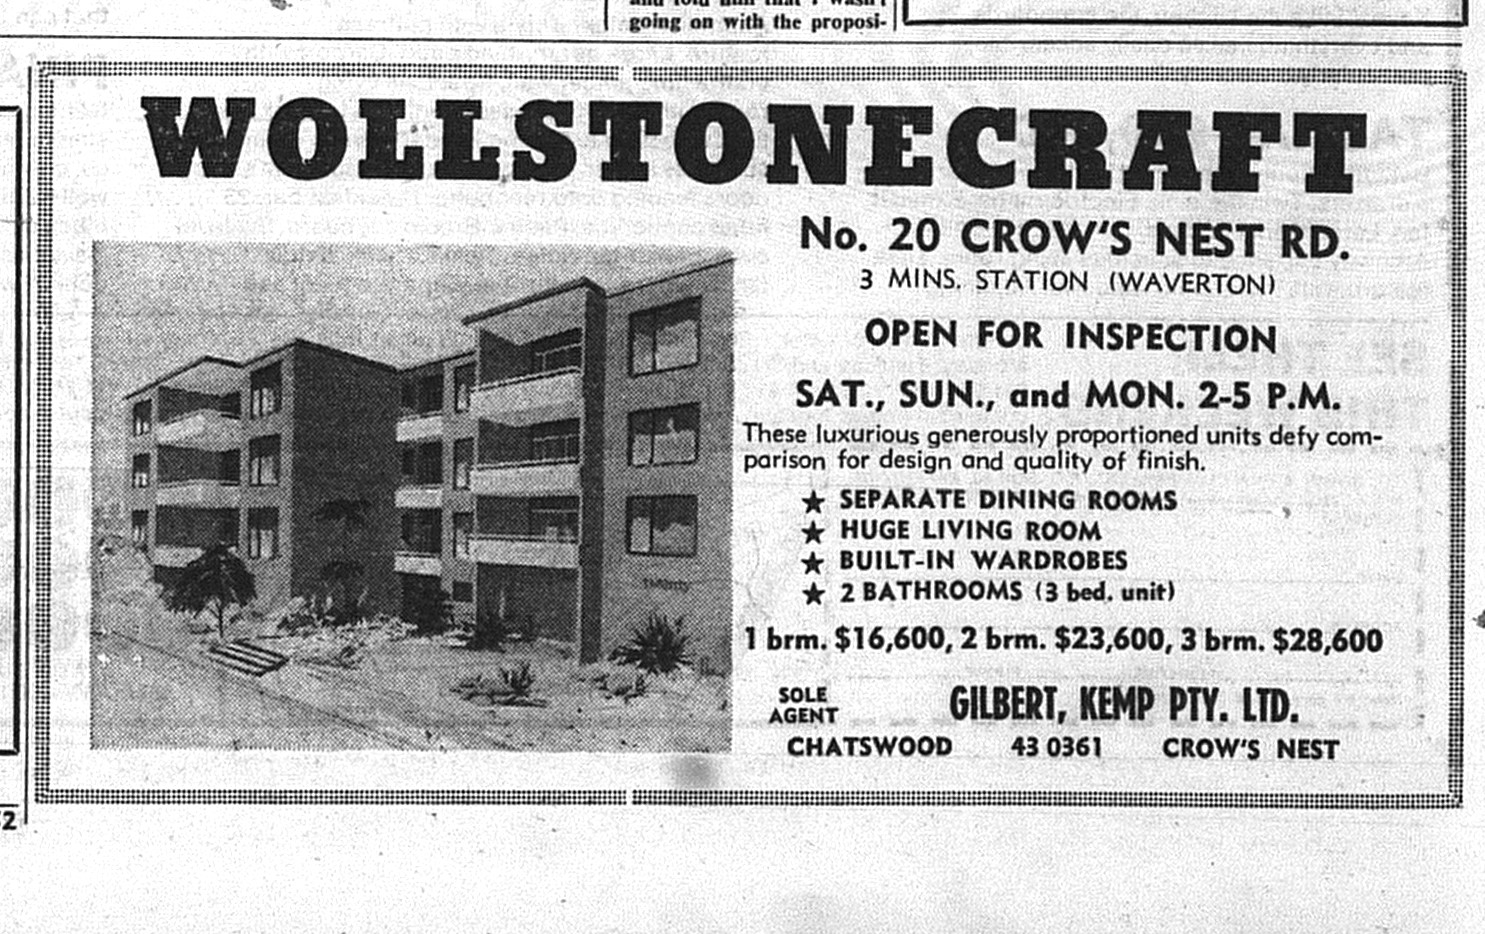 Wollstonecraft Units Ad June 12 1970 The Sun 52